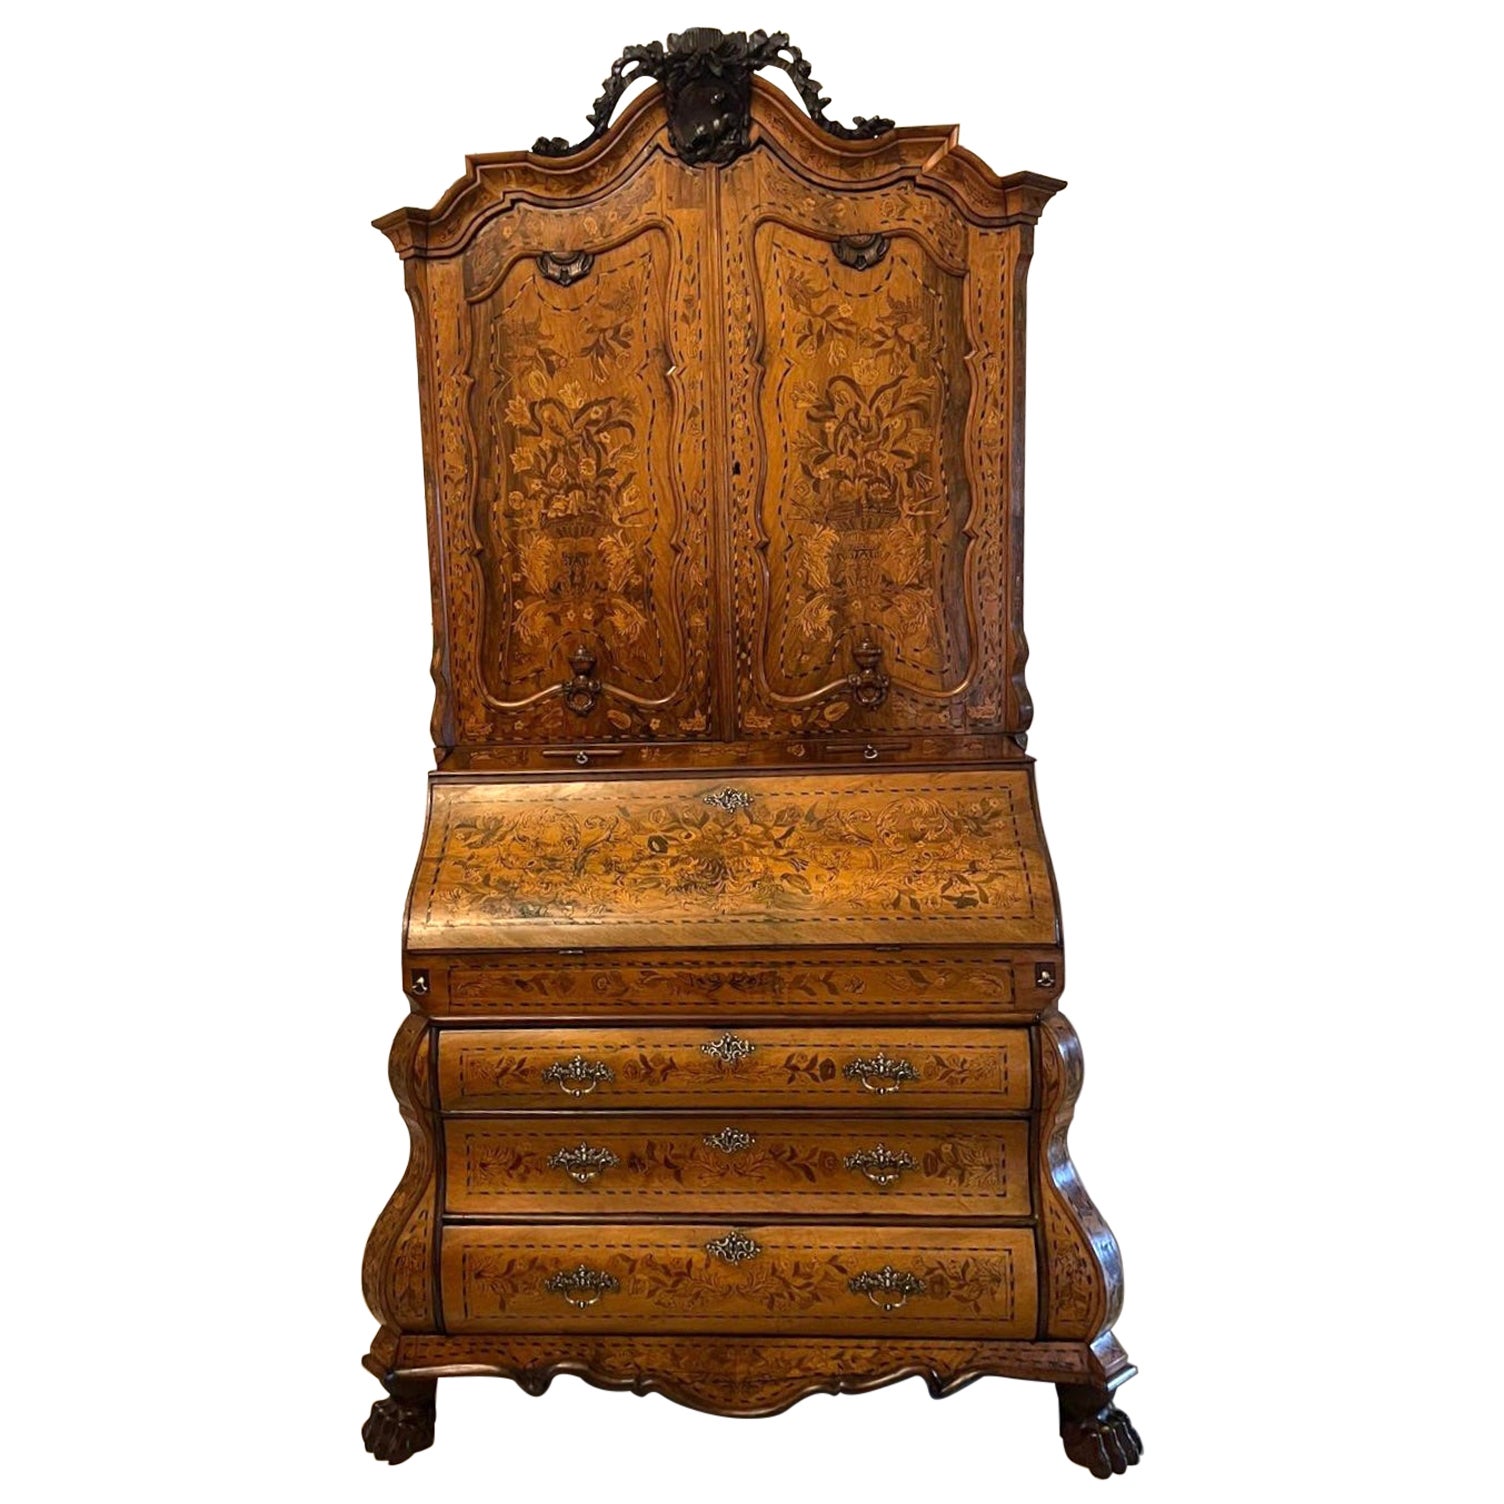 Outstanding Quality Antique Dutch Marquetry Inlaid Burr Walnut Bureau Bookcase For Sale